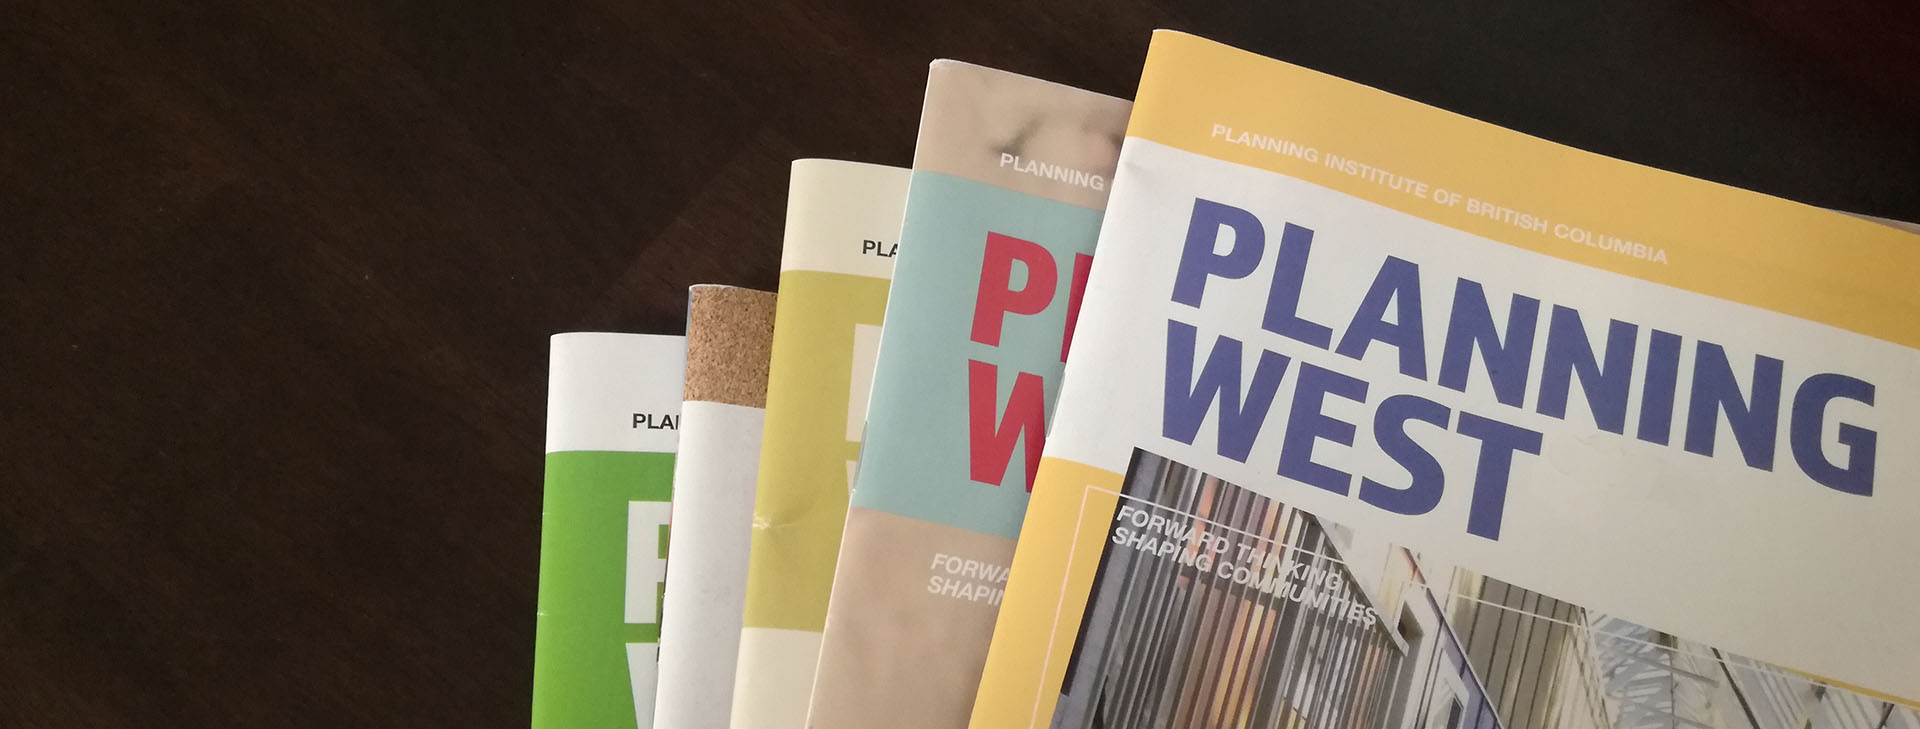 Planning West magazines